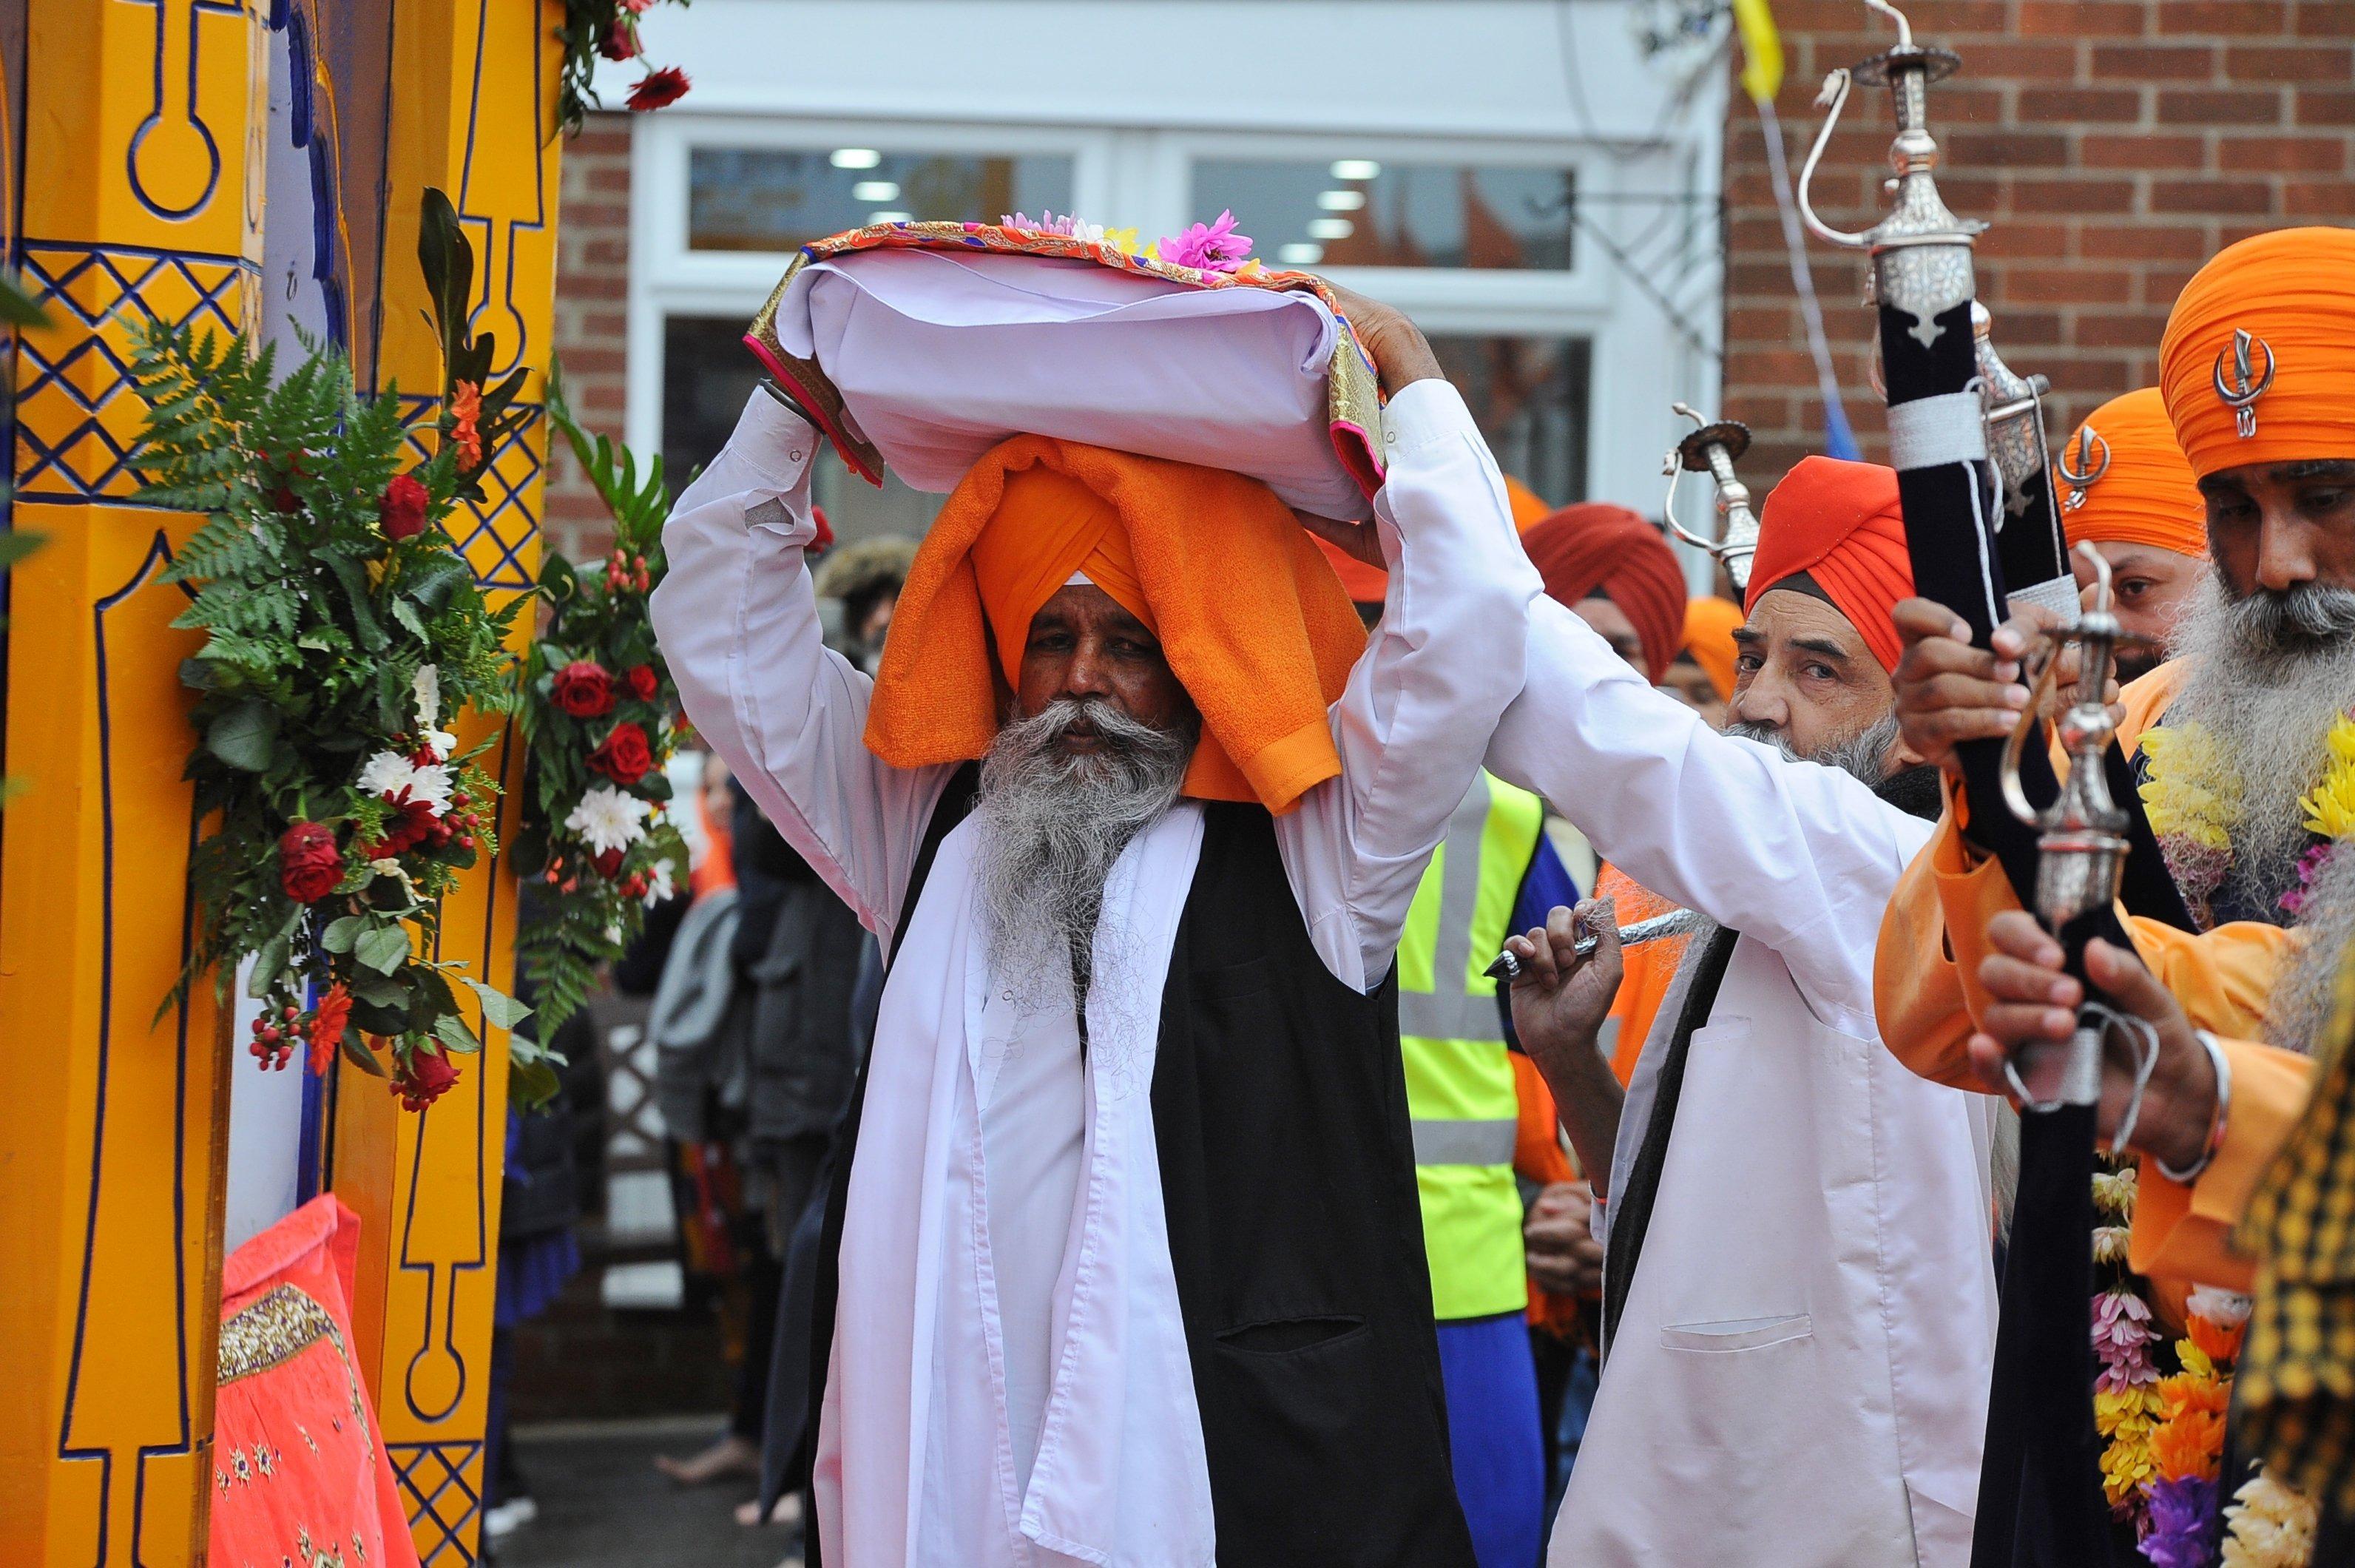 Peterborough Sikh Parade 2019 from the Gurdwara Baba Budha Sahib Temple at Royce Road to Sri Guru Singh Gurdwara Temple at Newark Road EMN-190211-213111009